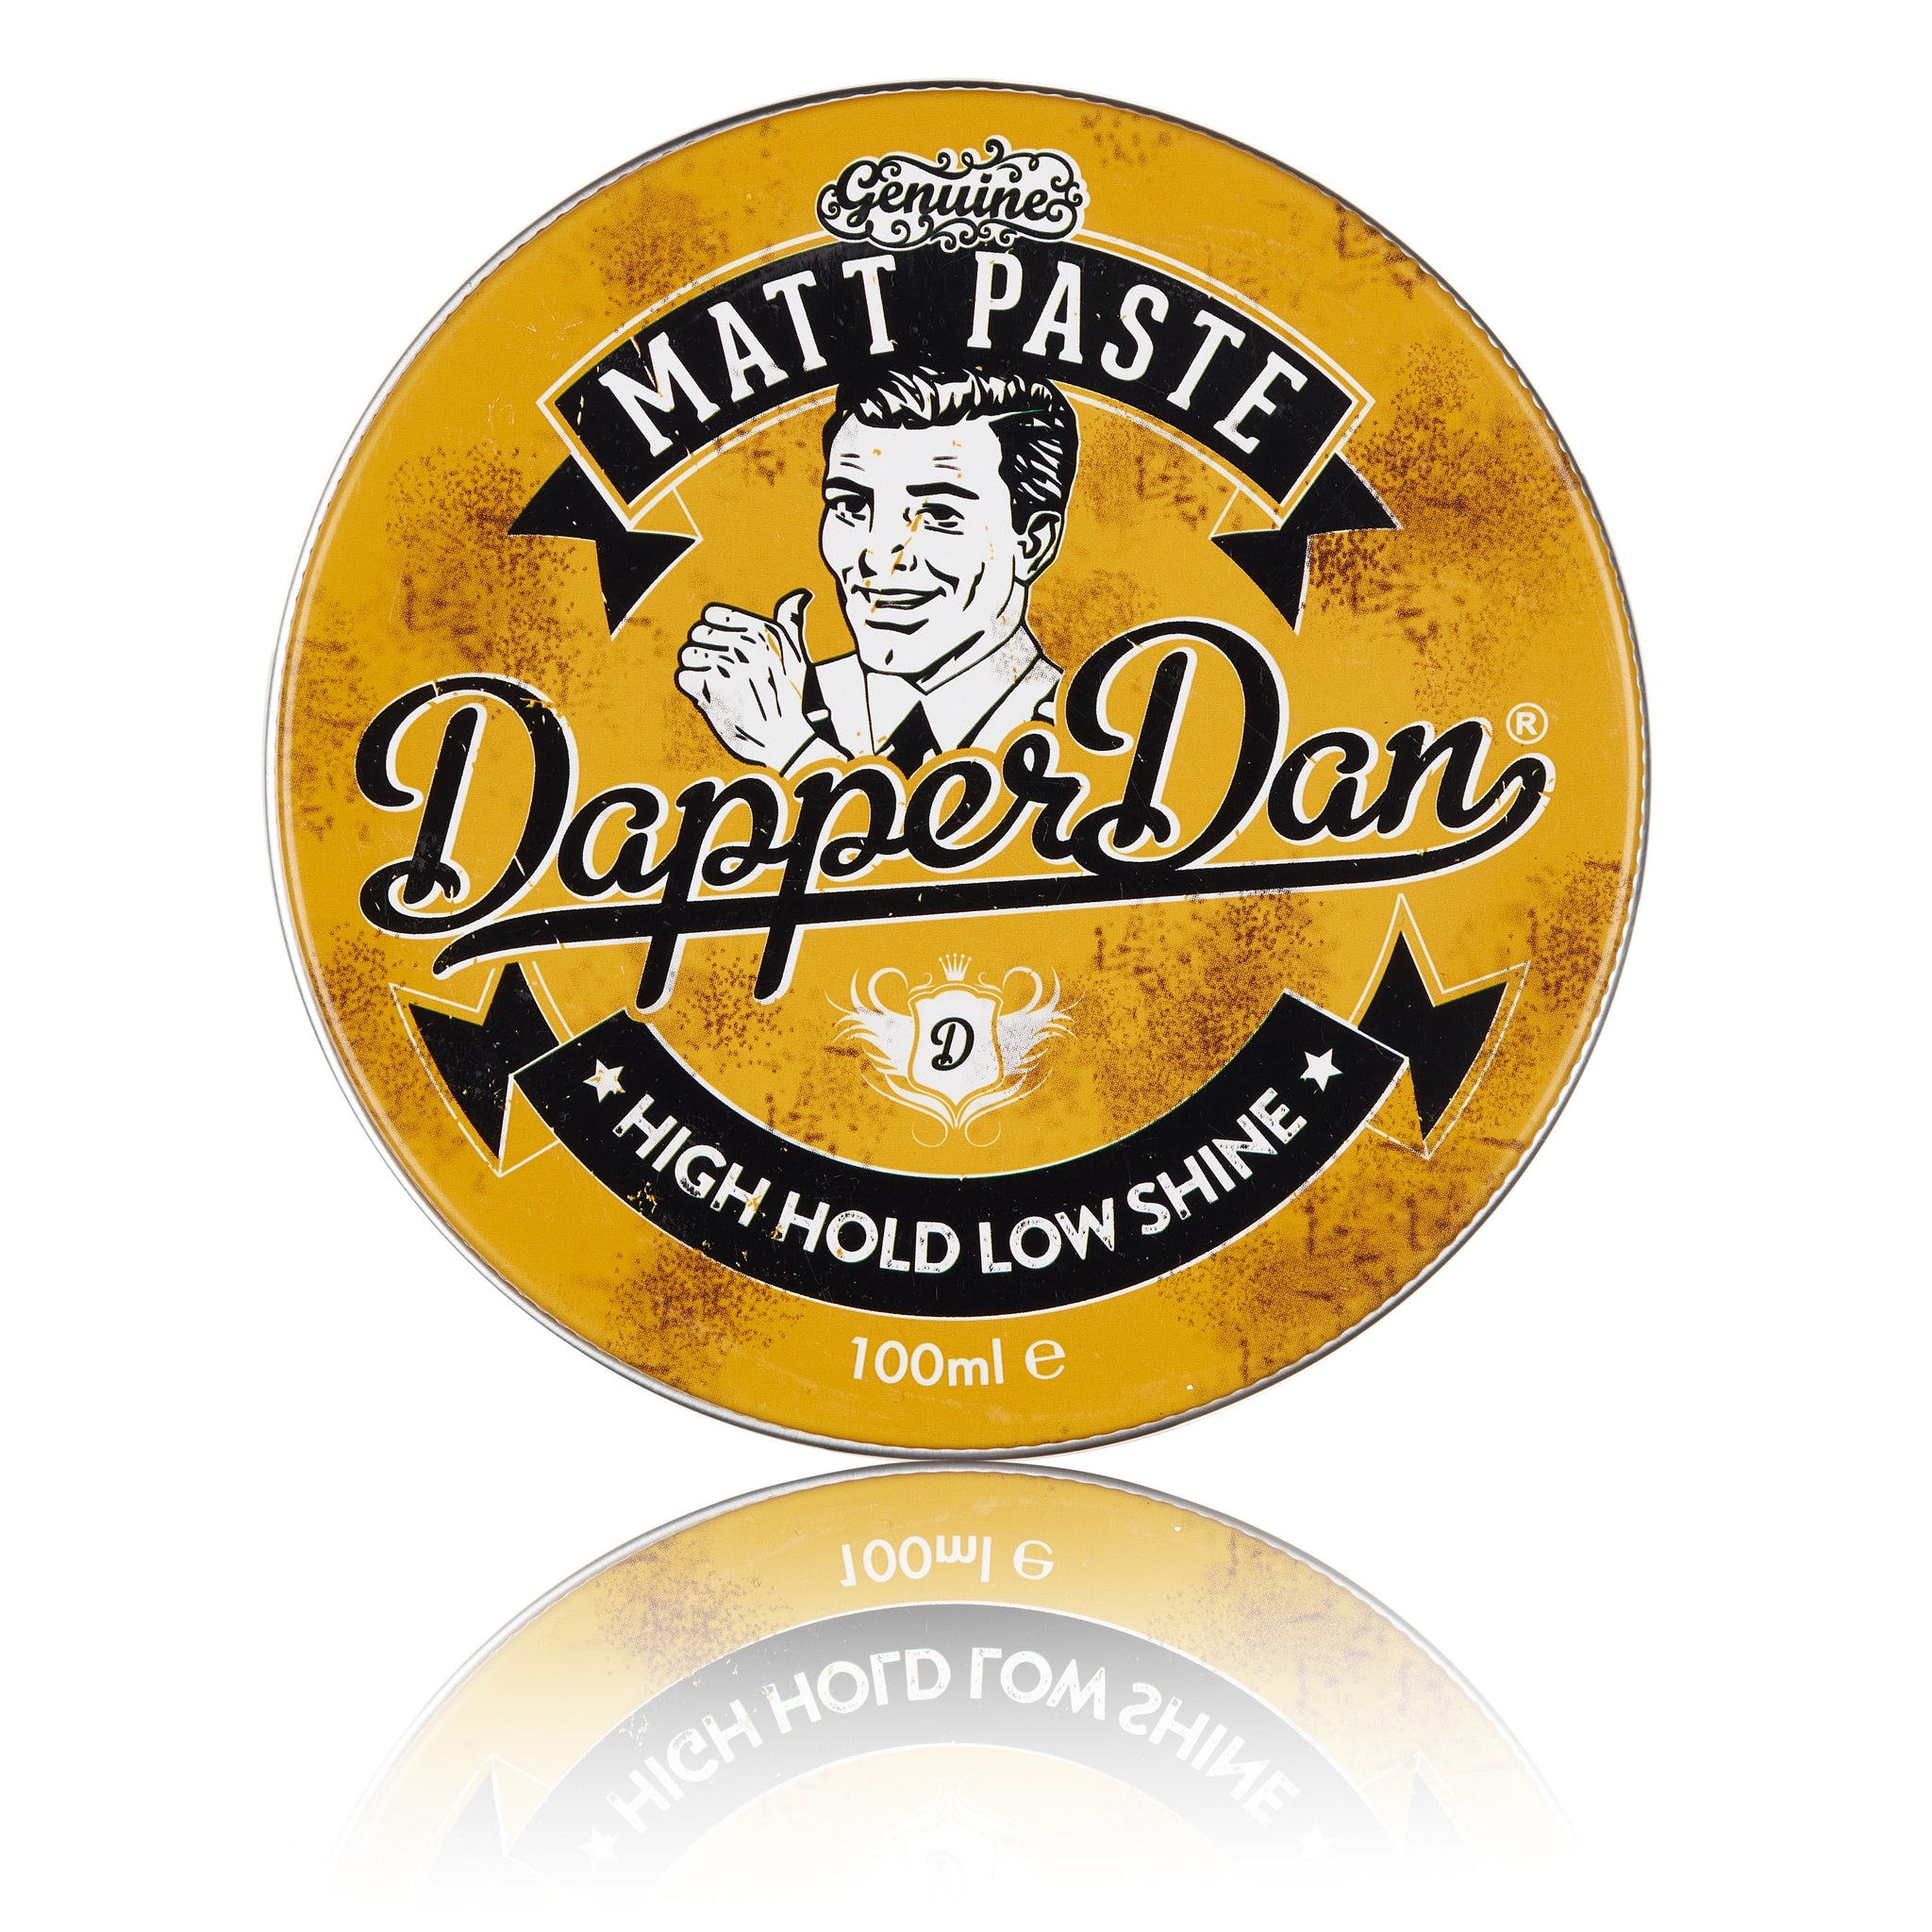 Matt Paste - Dapper Dan